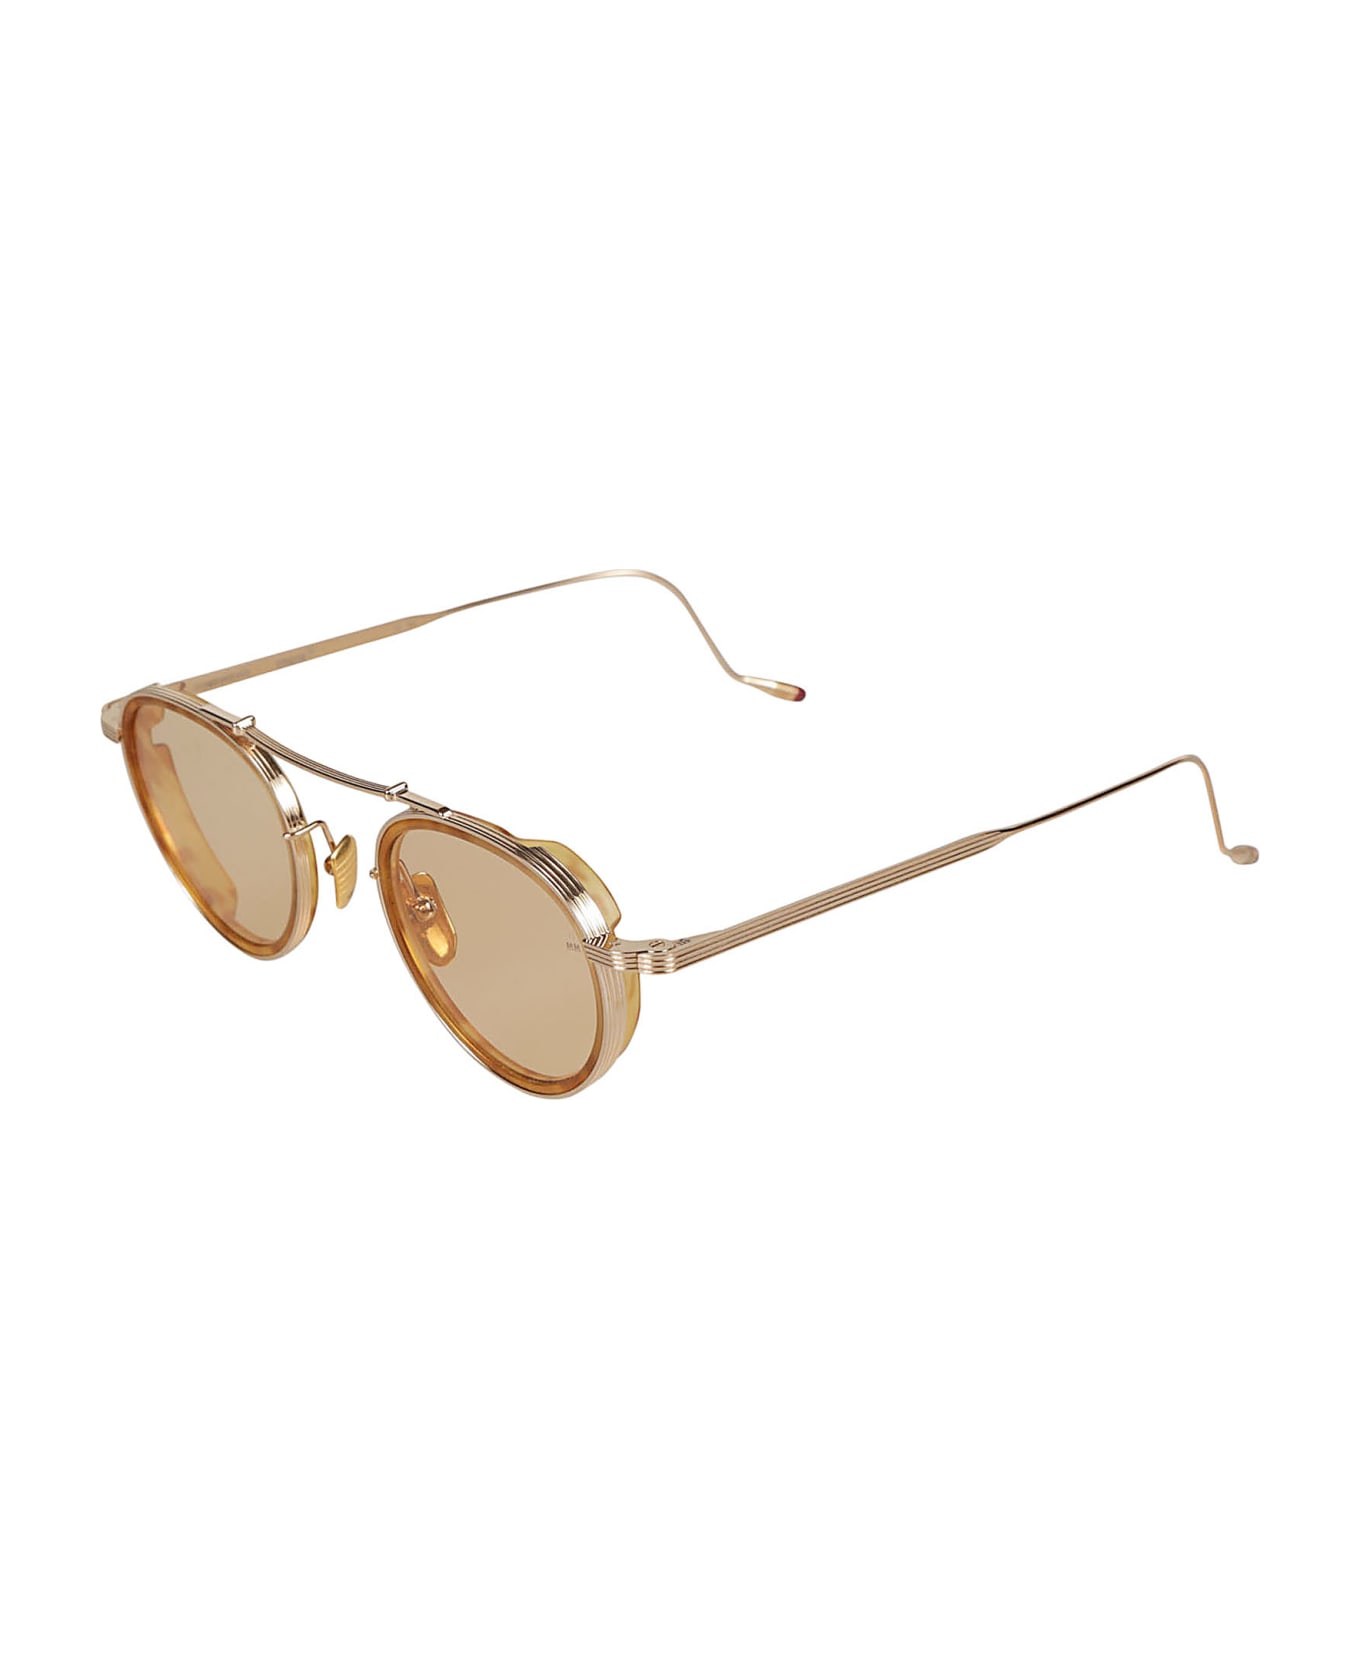 Jacques Marie Mage Apollinaire2 Sunglasses leap Sunglasses leap - silver